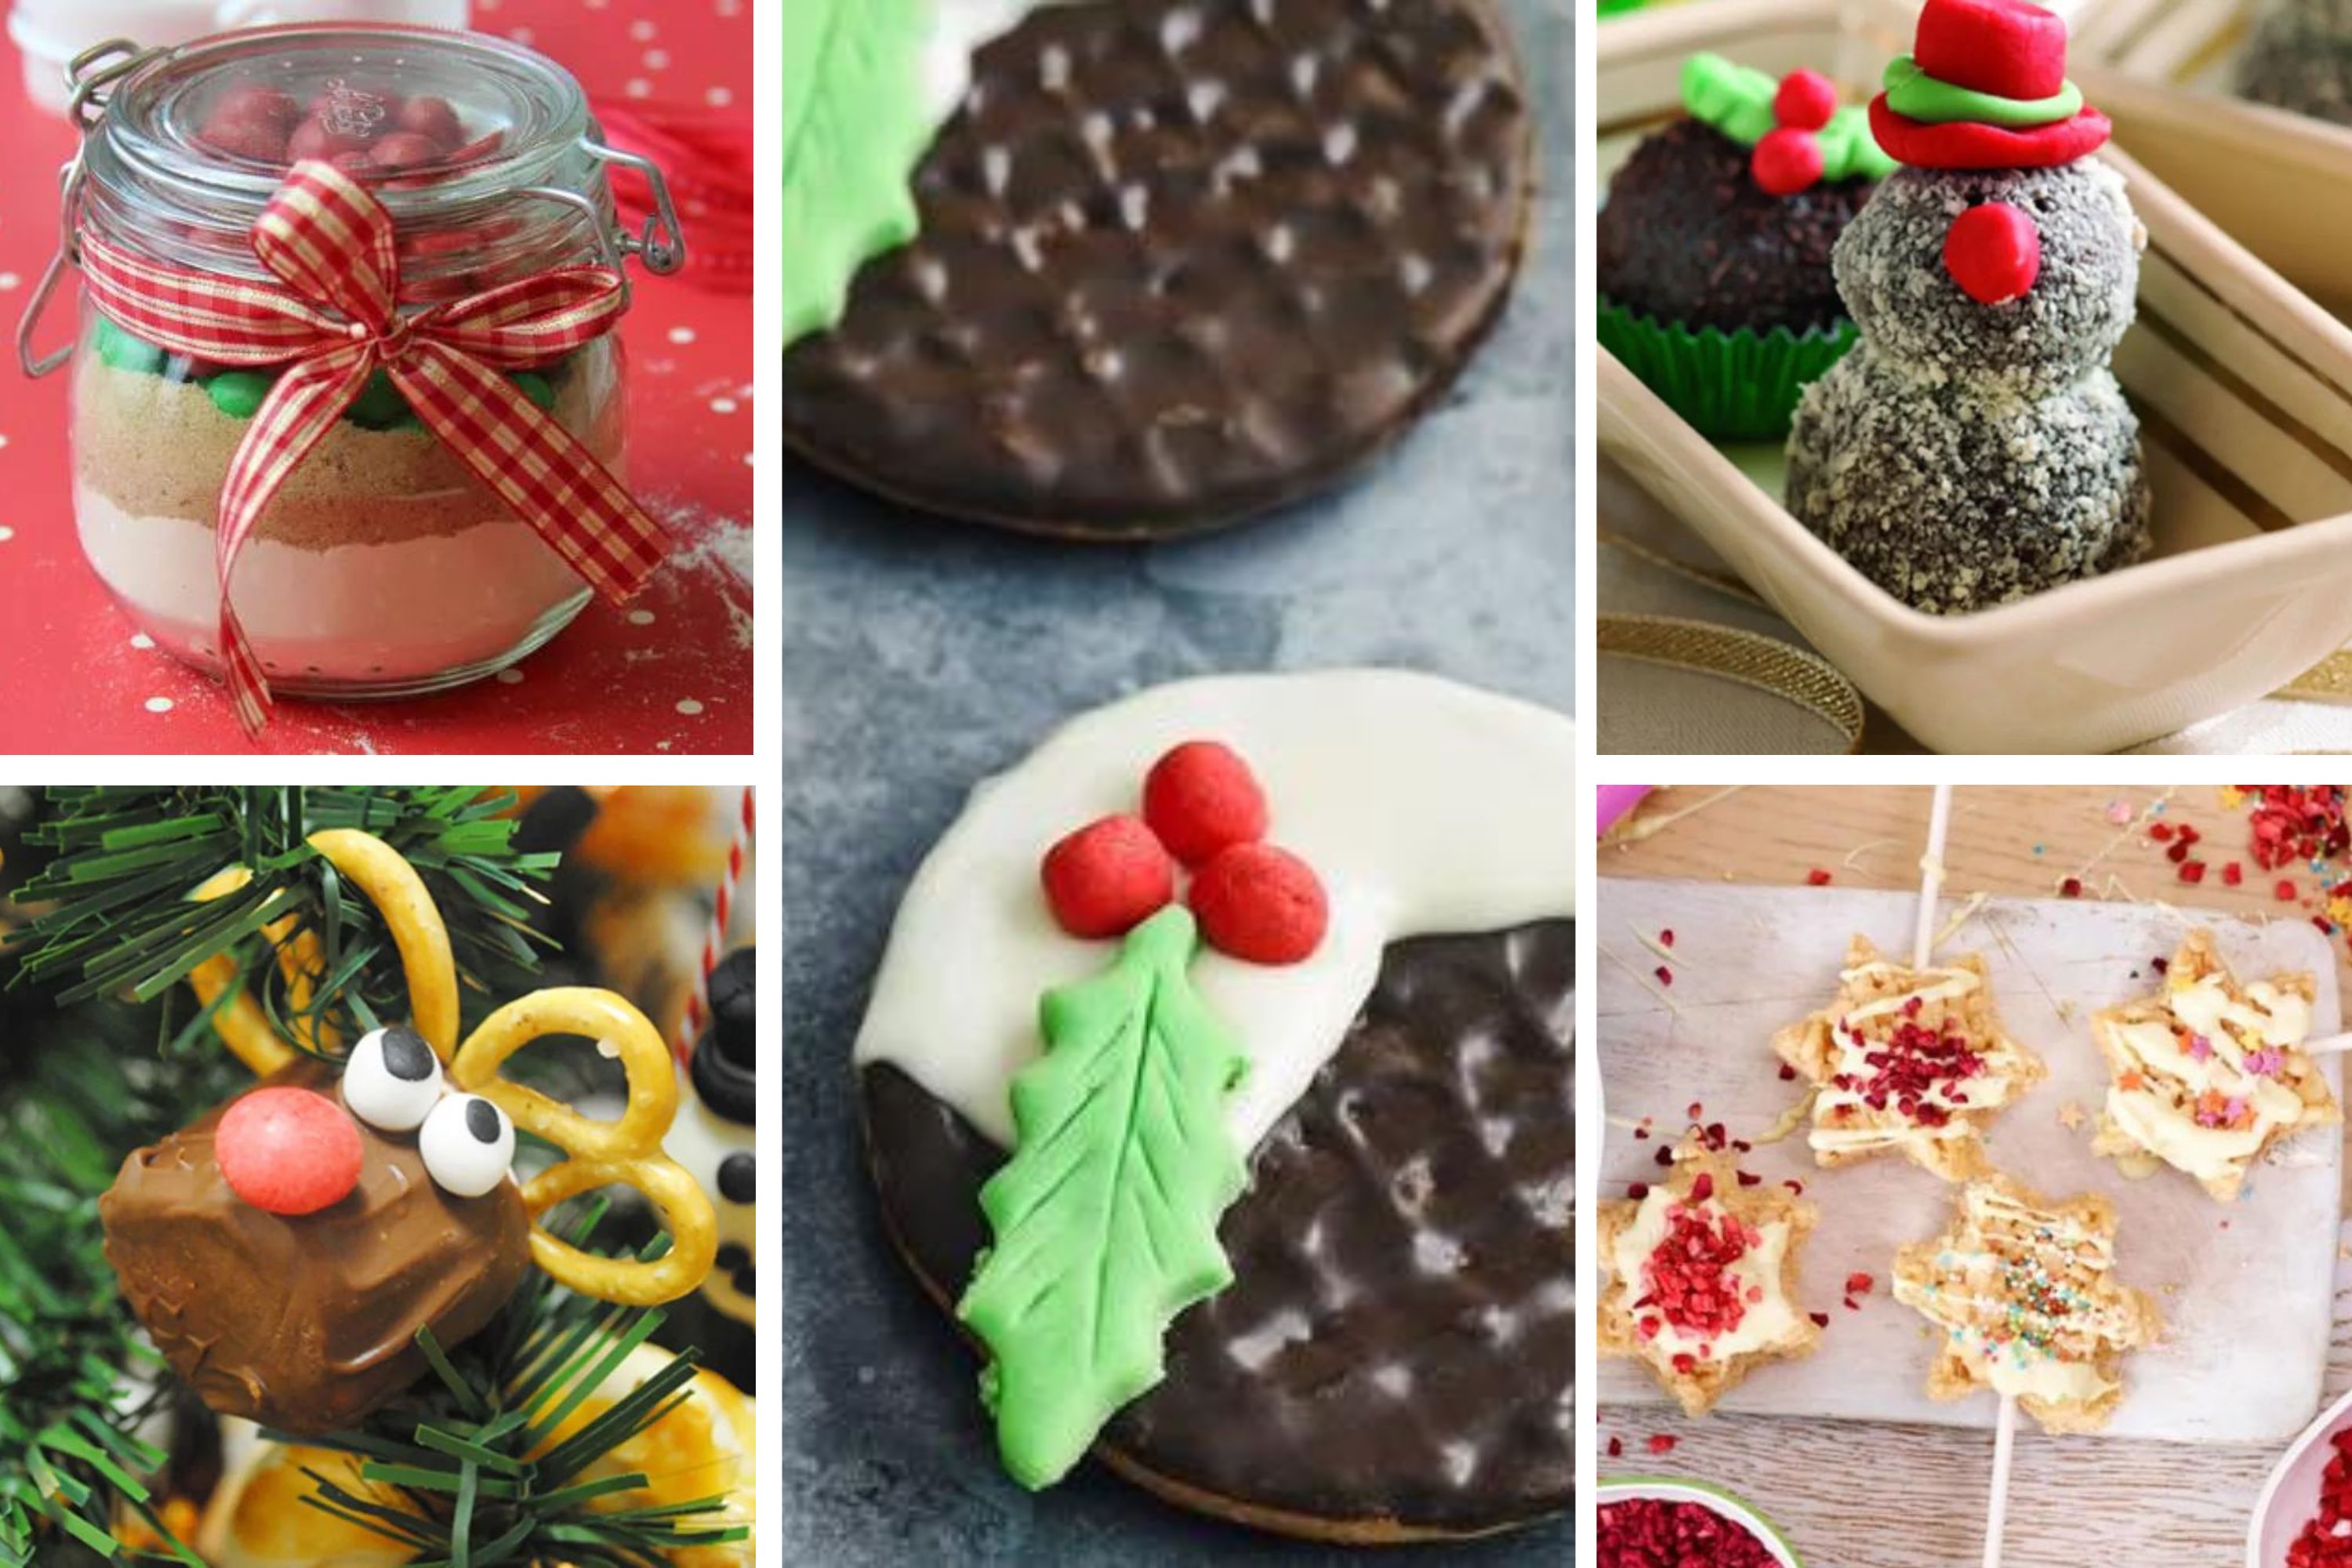 19 Fun Christmas Food Ideas - Bright Star Kids - Party Food Ideas